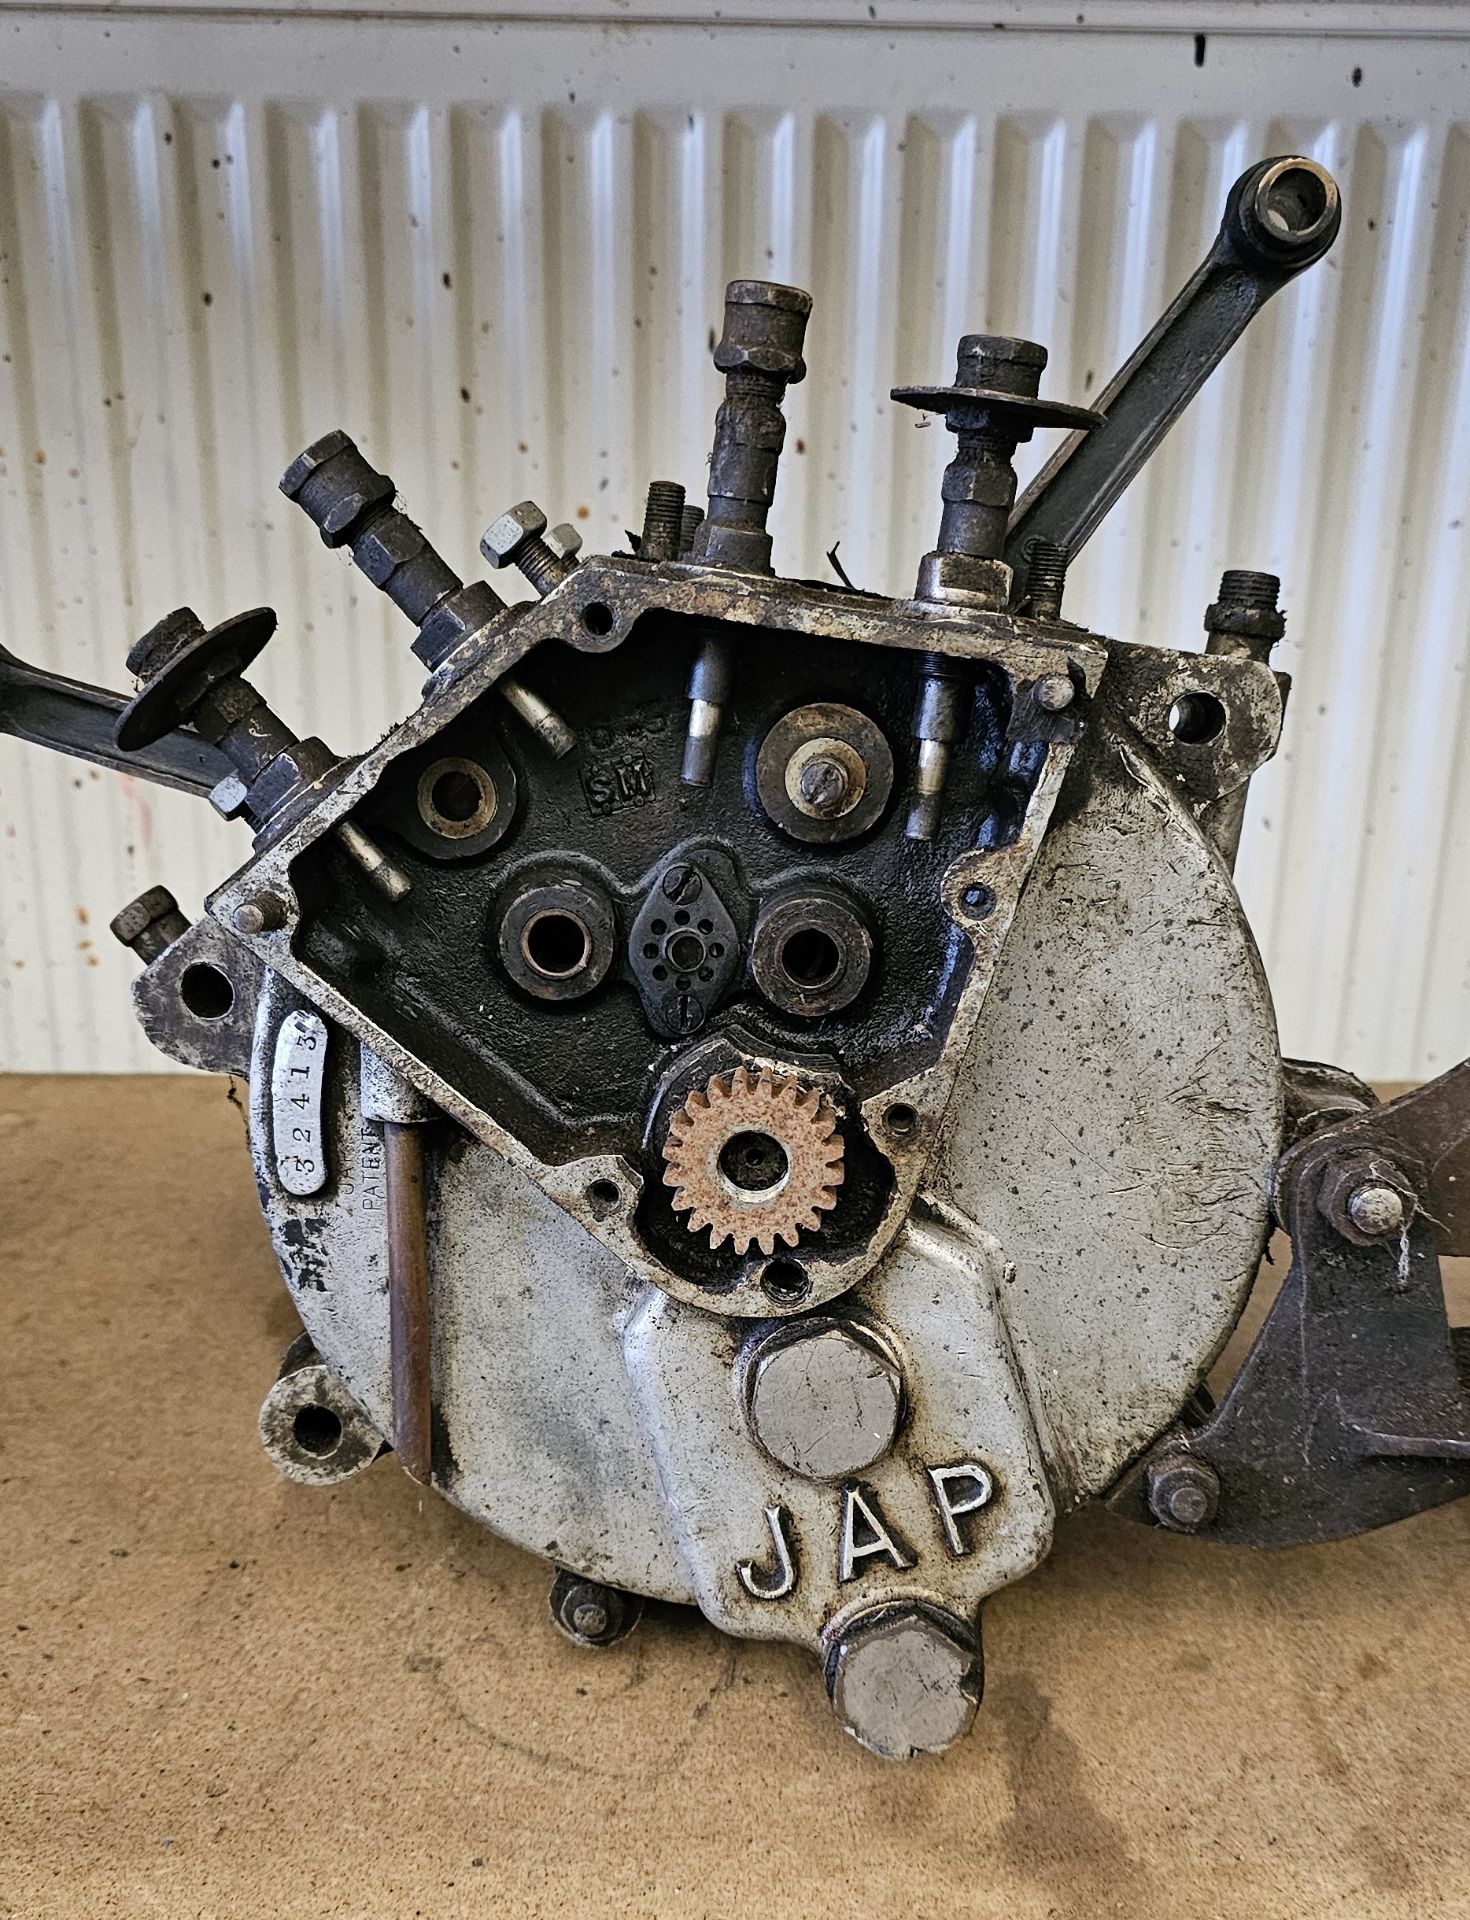 A J.A.P. part V twin engine, no 32413 - Image 2 of 3